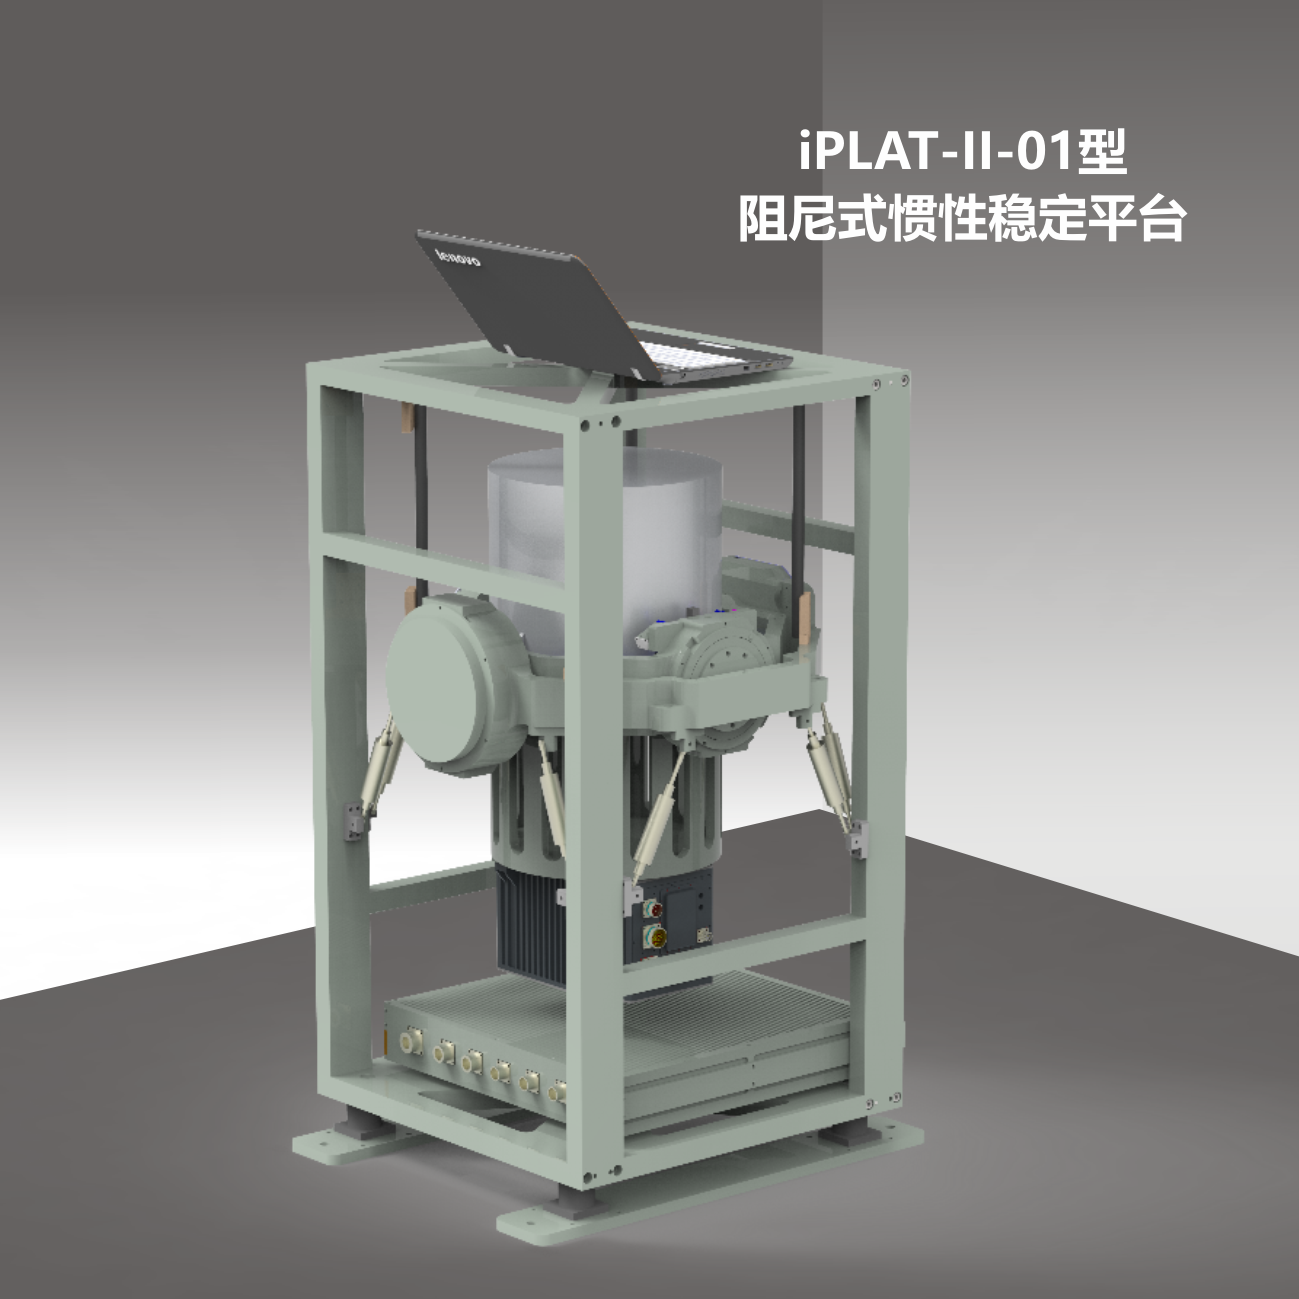 iPLAT-II-01型阻尼式惯性稳定平台